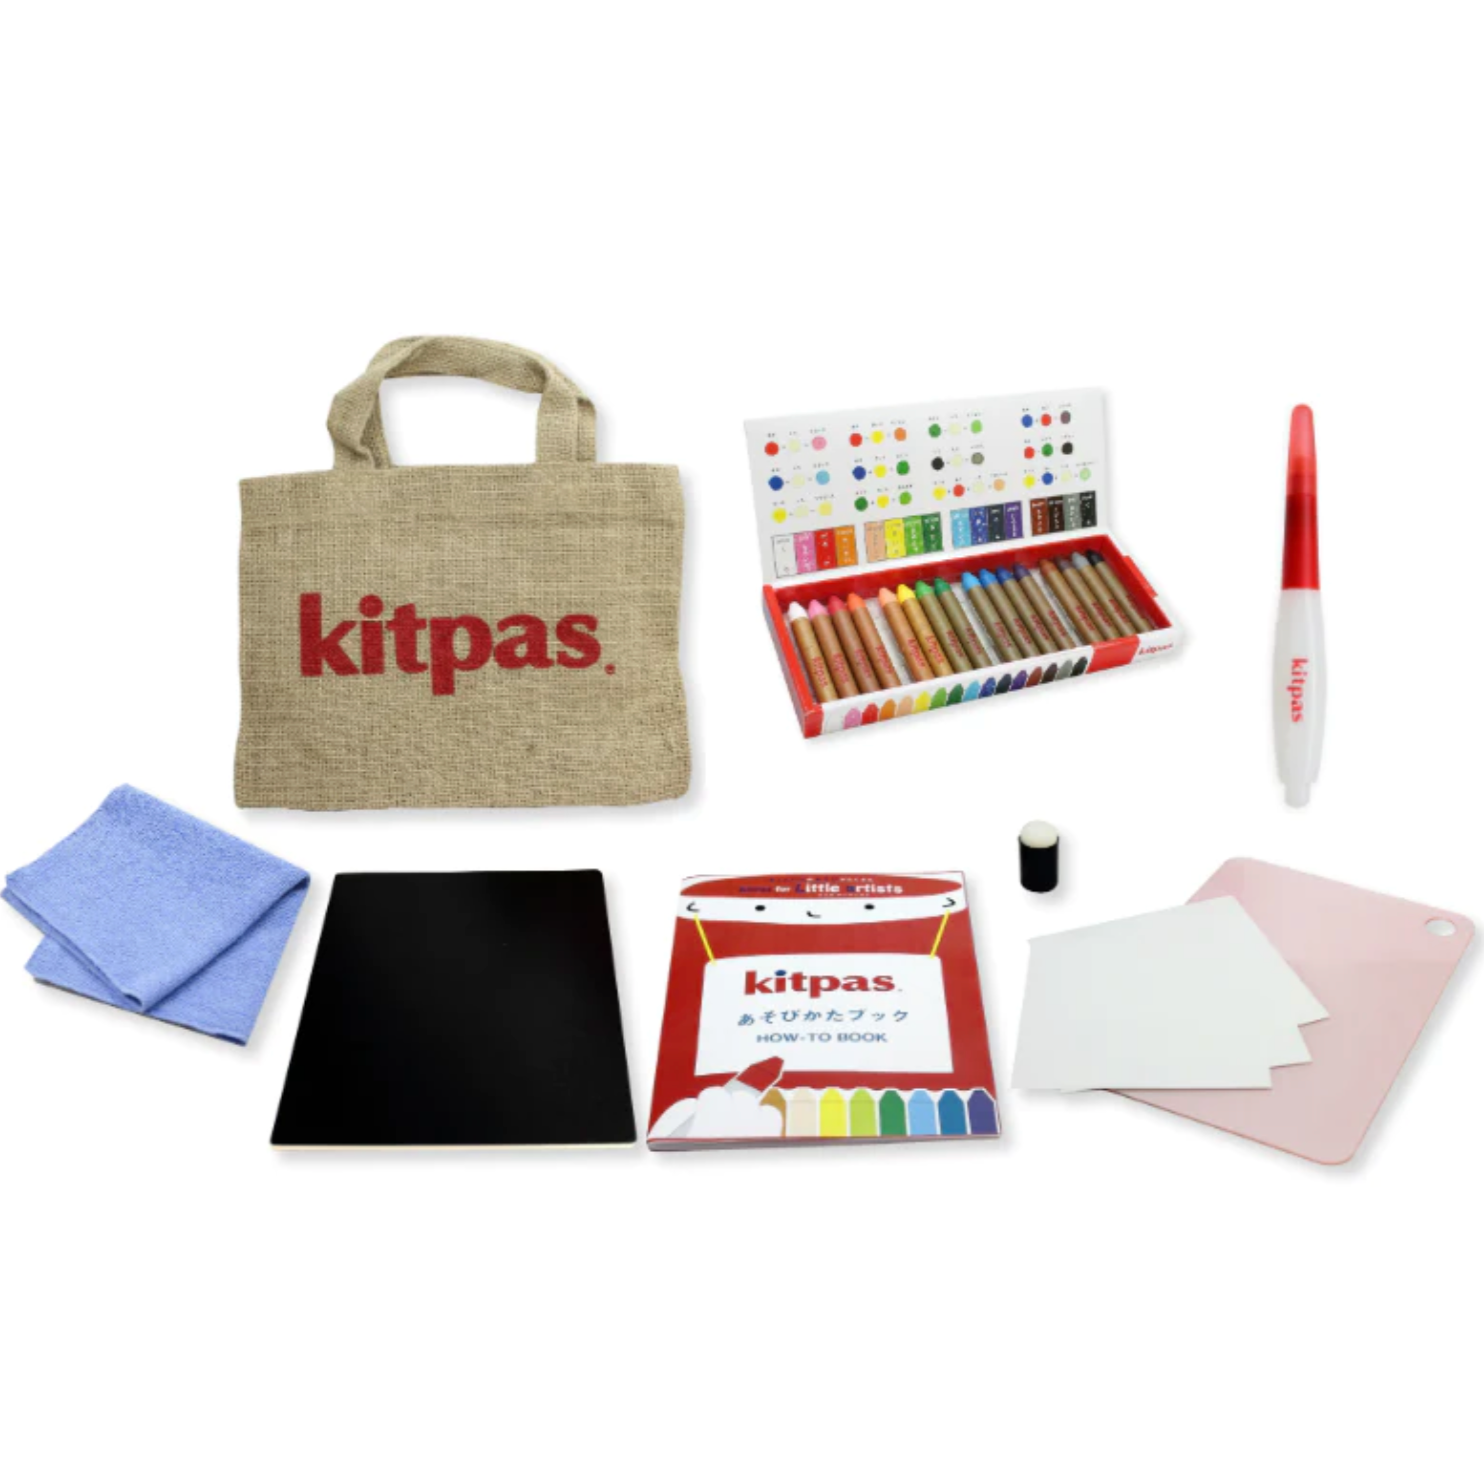 Kitpas for Little Artists (3-6yrs)